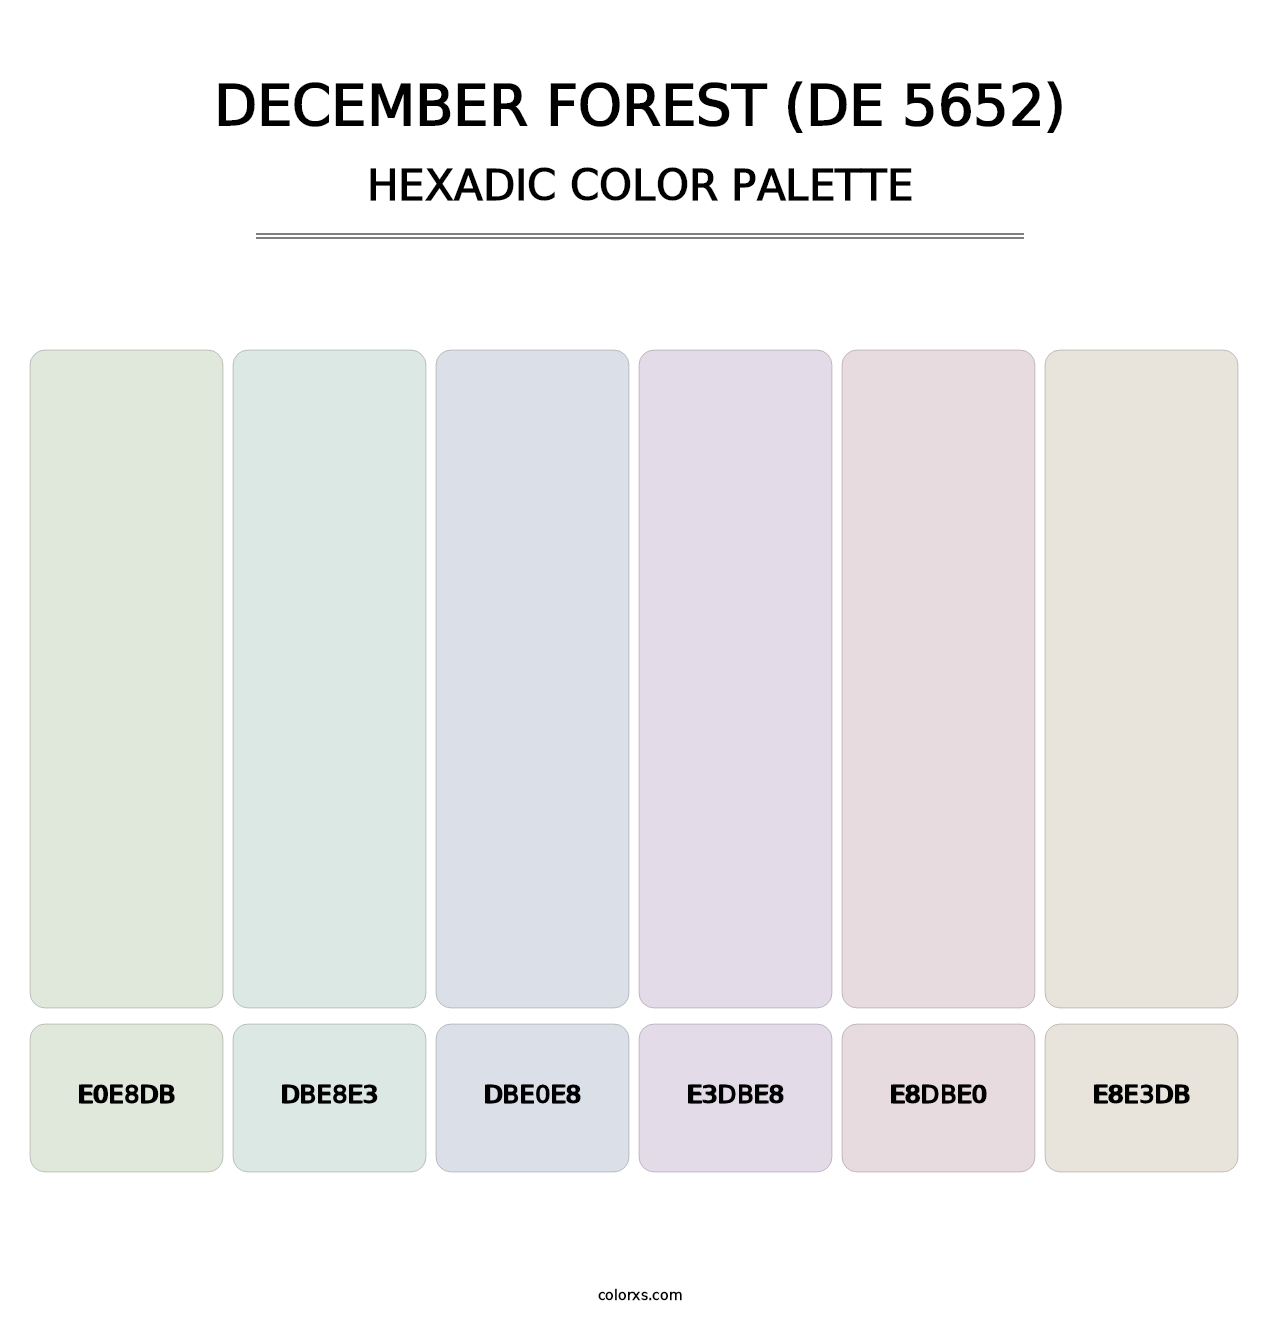 December Forest (DE 5652) - Hexadic Color Palette